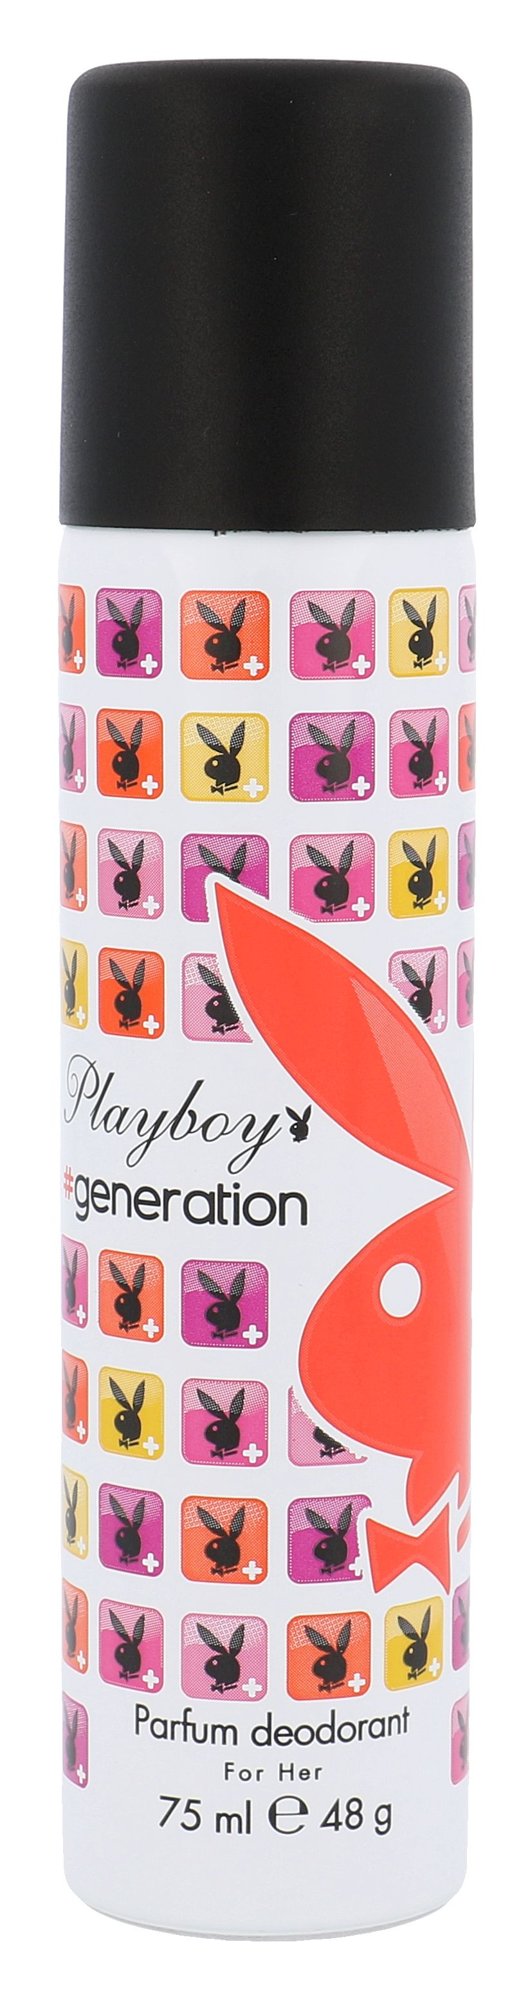 Playboy Generation For Her 75ml dezodorantas